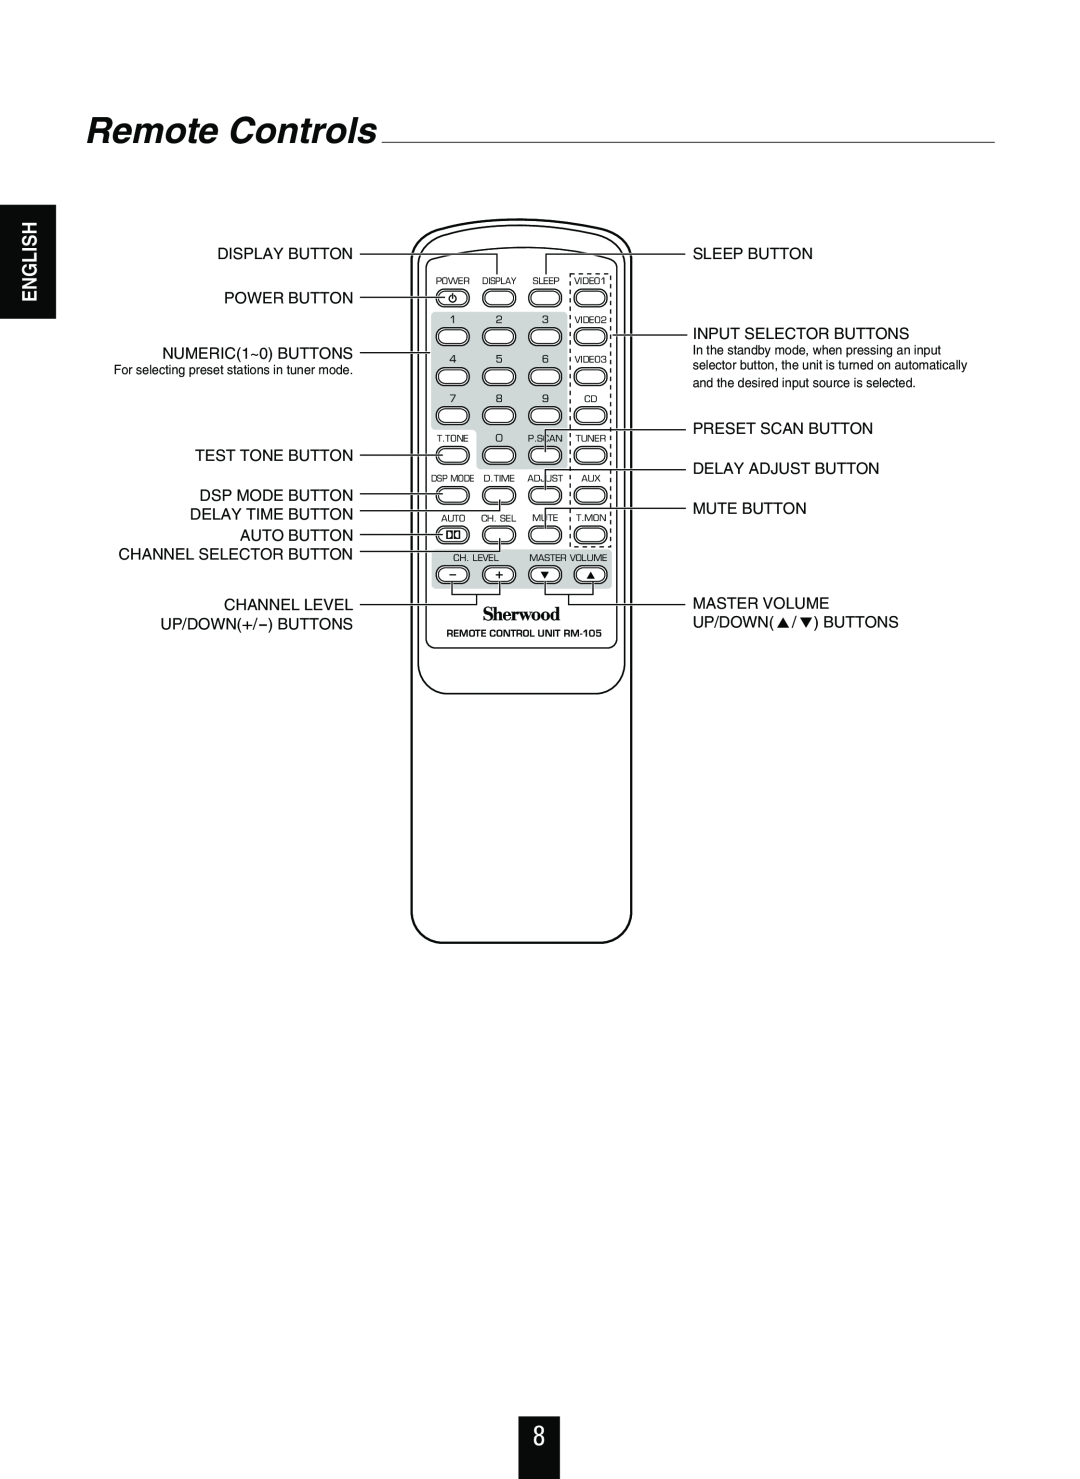 Sherwood RD-6108 manual Remote Controls, English 